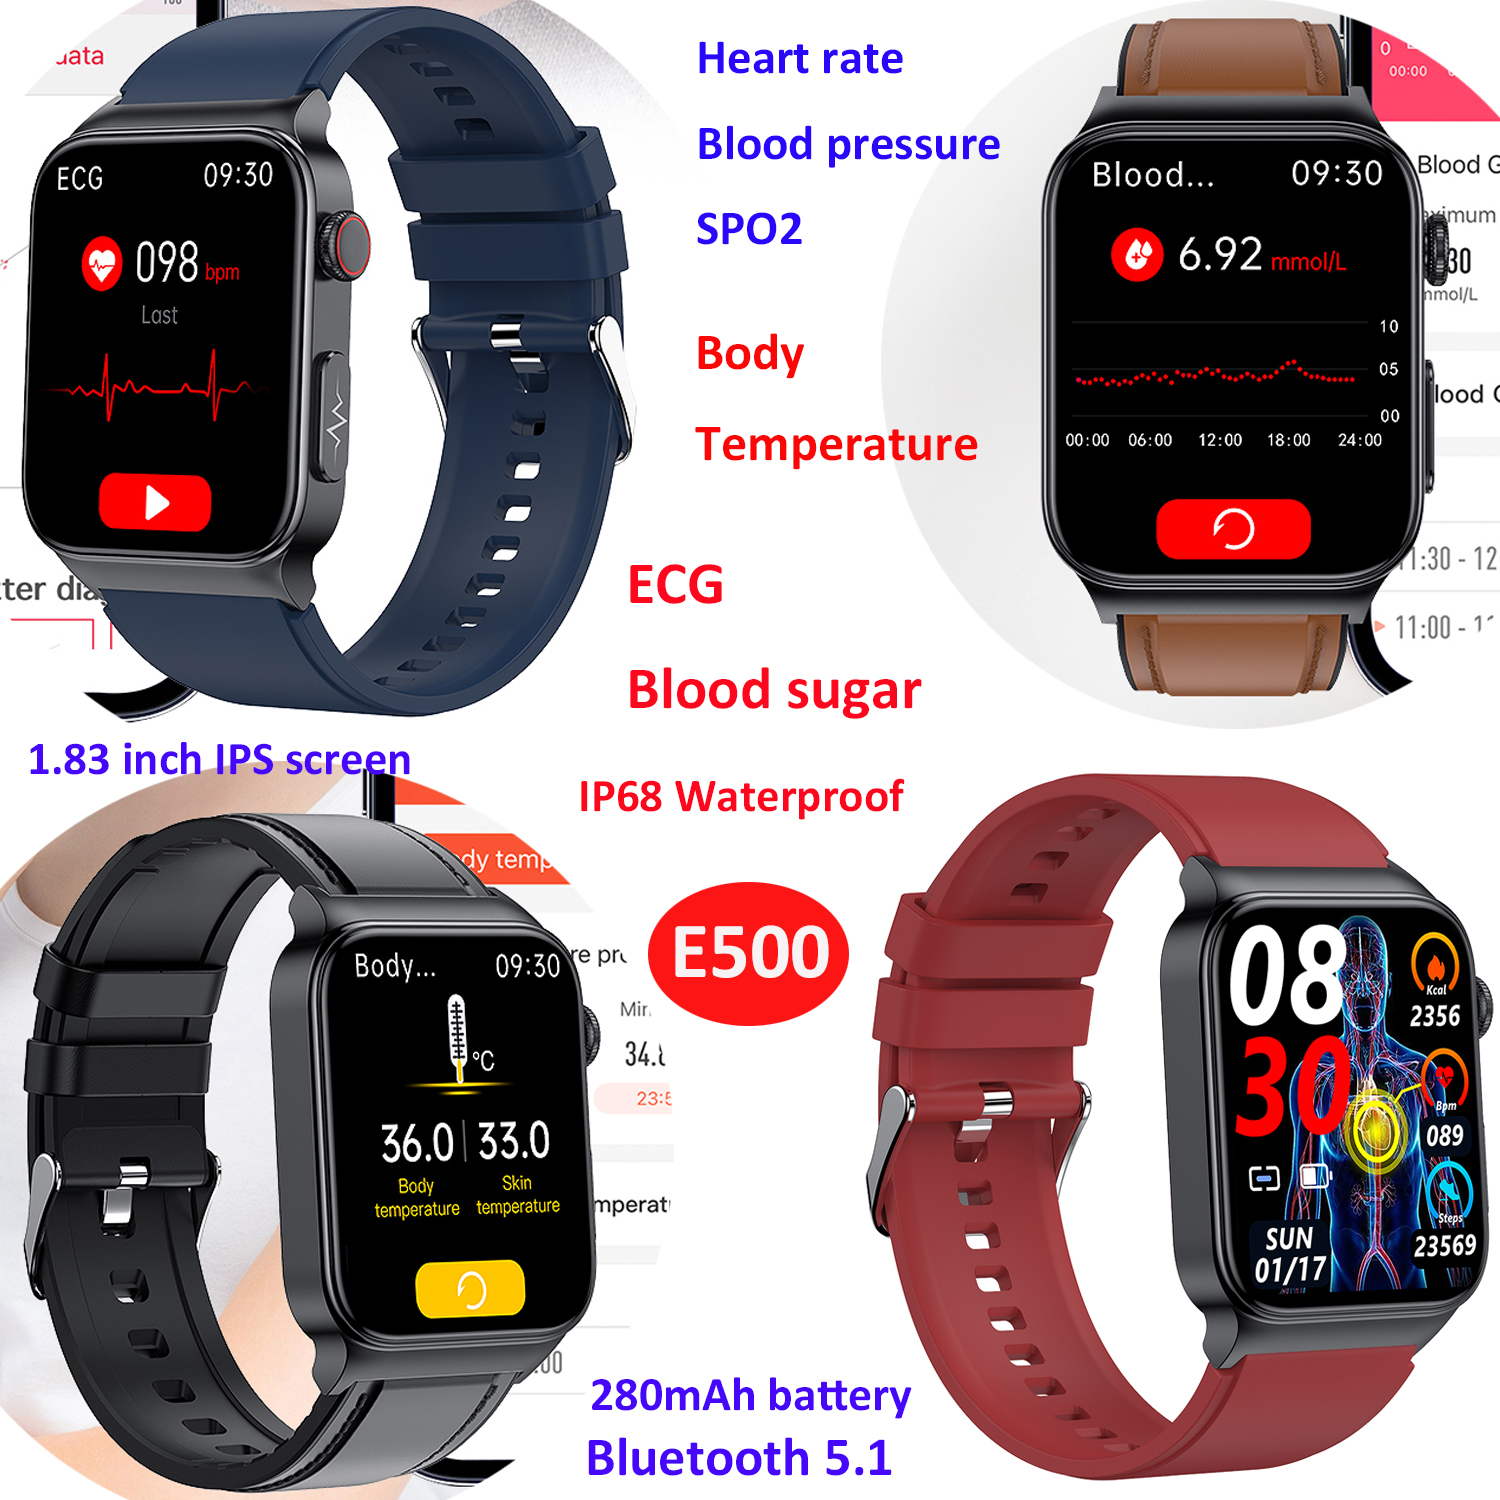 Body temperature Blood sugar waterproof ECG Smart bluetooth Watch E500